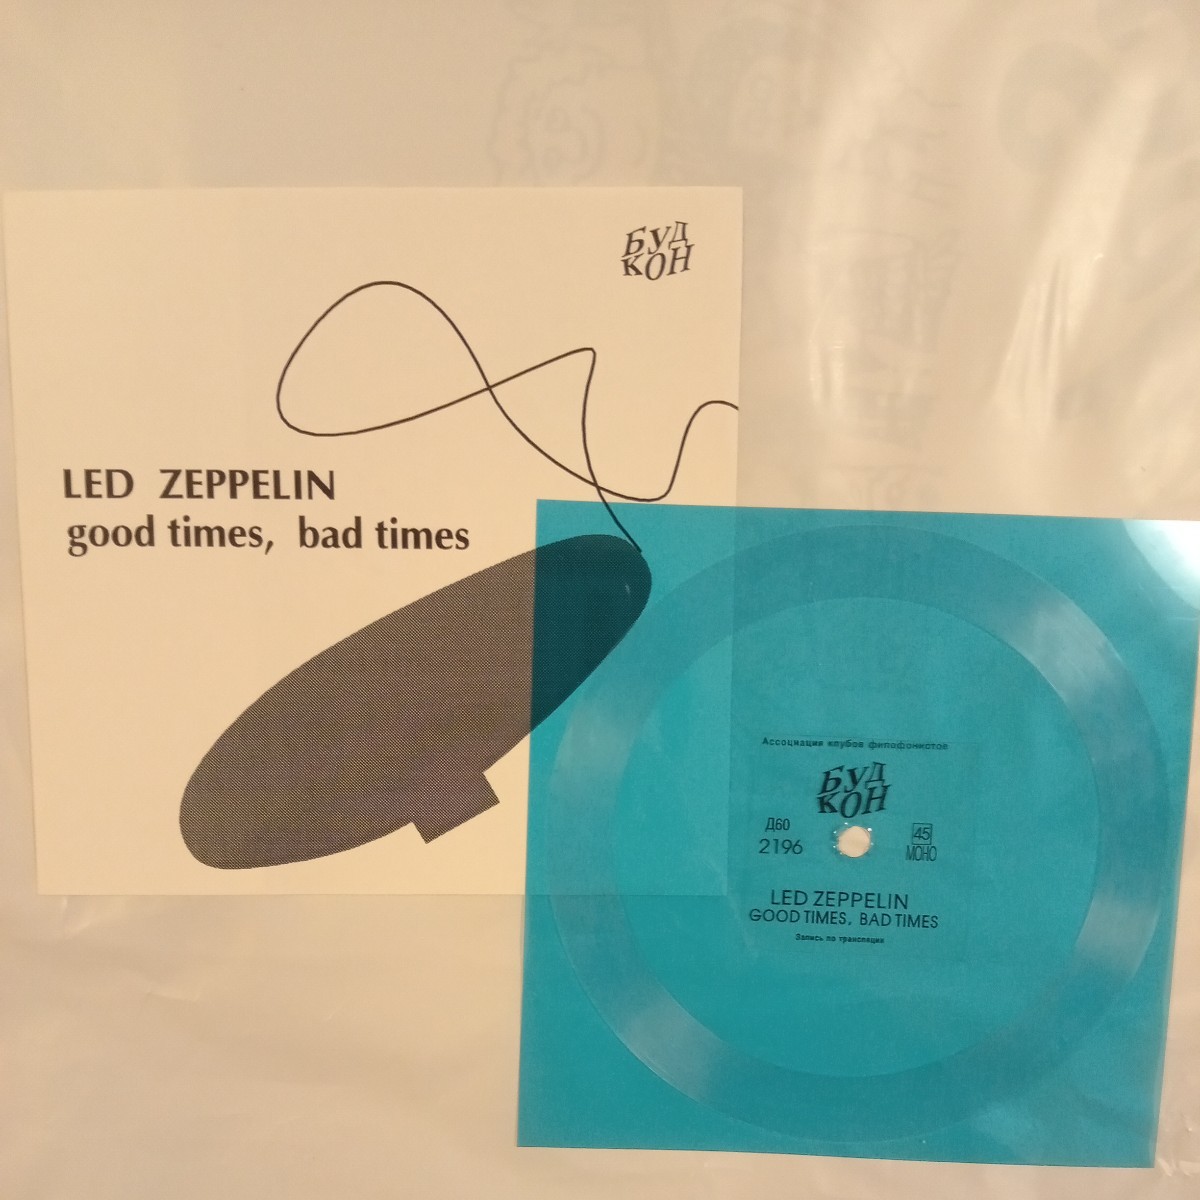 led zeppelin good times bad times レッド・ツェッペリン 7inch flex sheet ソノシート vinyl レコード アナログ lp record シングル の画像1